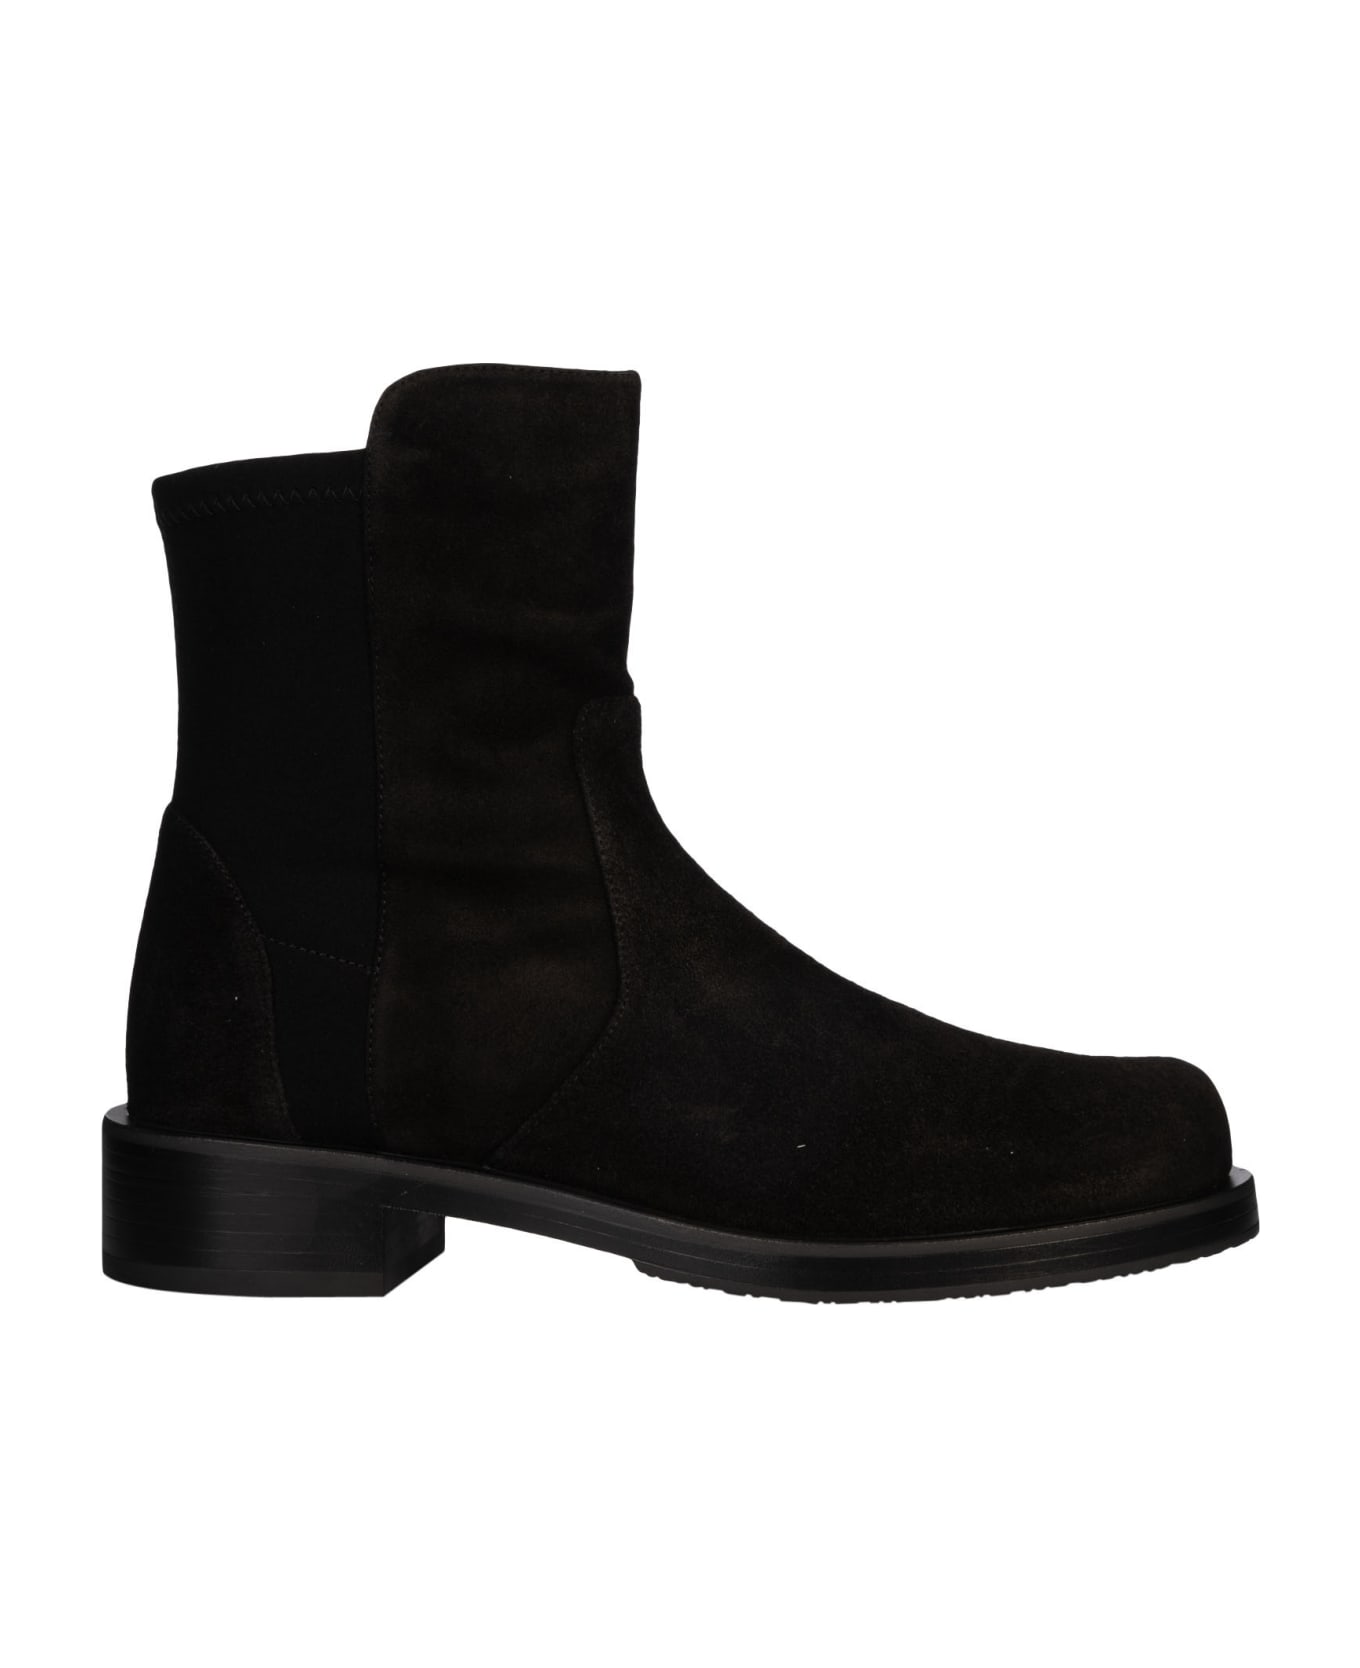 Stuart Weitzman Bold Boots - Black ブーツ